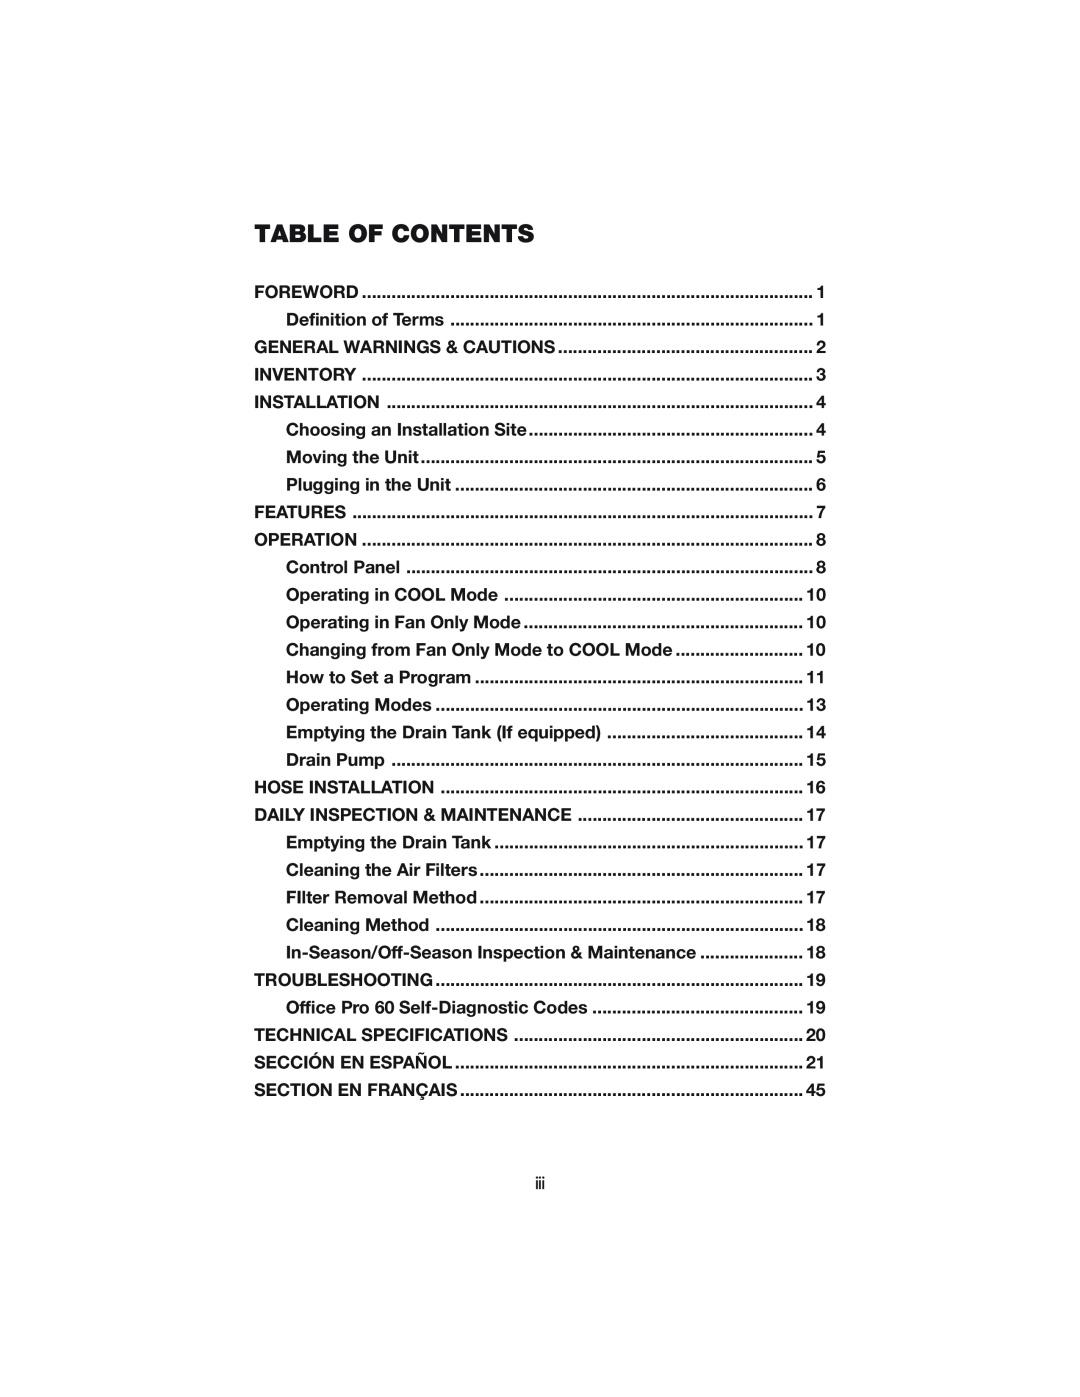 Denso PRO 60 operation manual Table Of Contents, In-Season/Off-SeasonInspection & Maintenance 